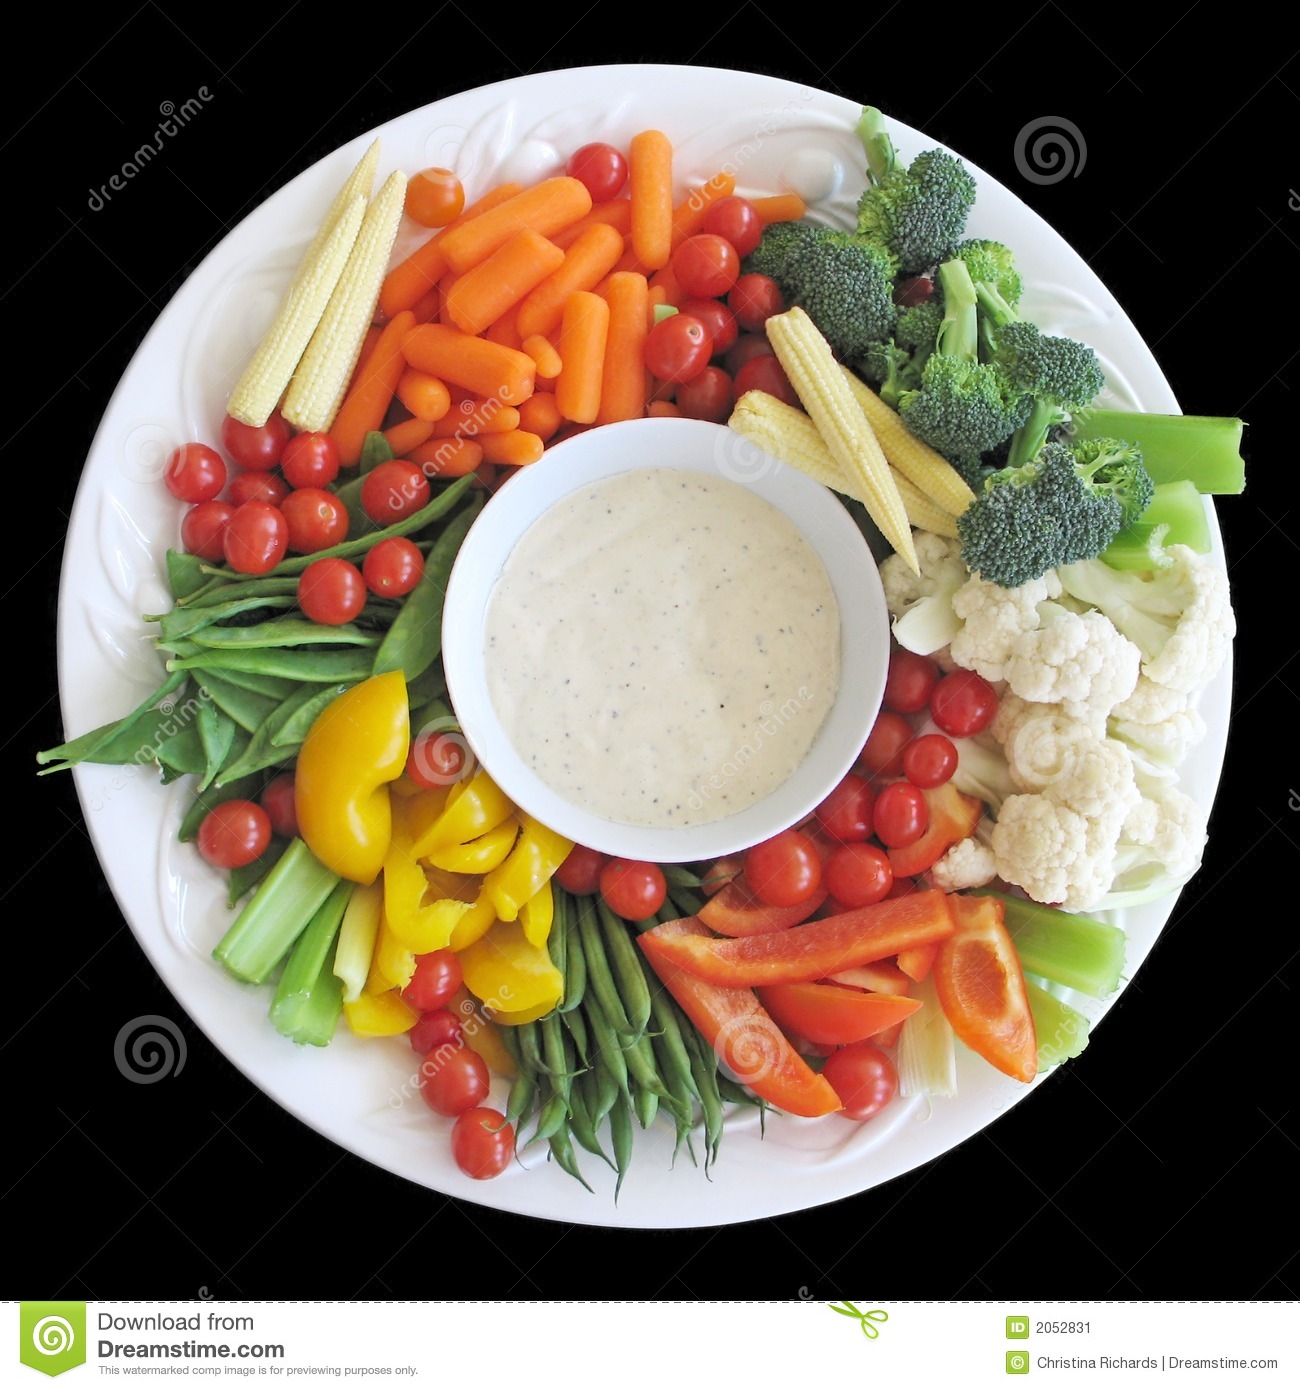 Platter Of Vegetables In A Harmonious Arrangement